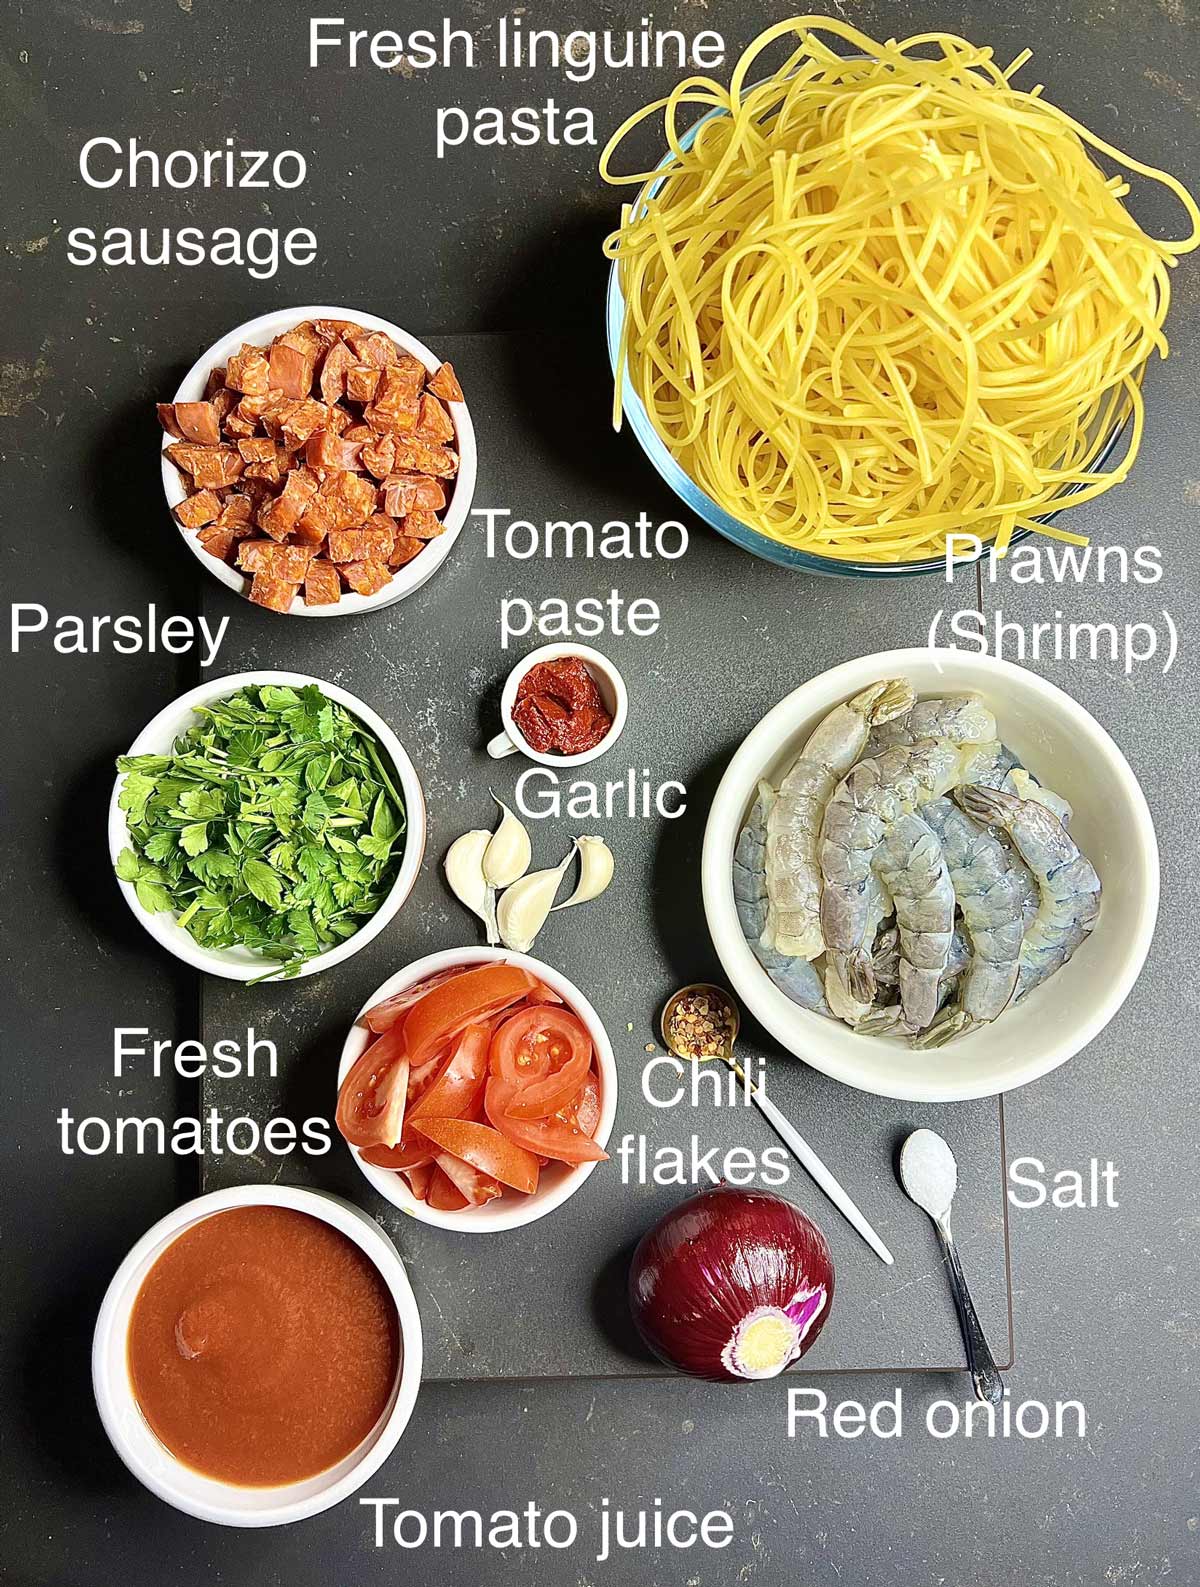 Ingredients needed (chorizo, fresh pasta, parsley, tomato paste, garlic prawns, fresh tomatoes, salt, red onion, tomato juice) for the prawn and chorizo pasta.